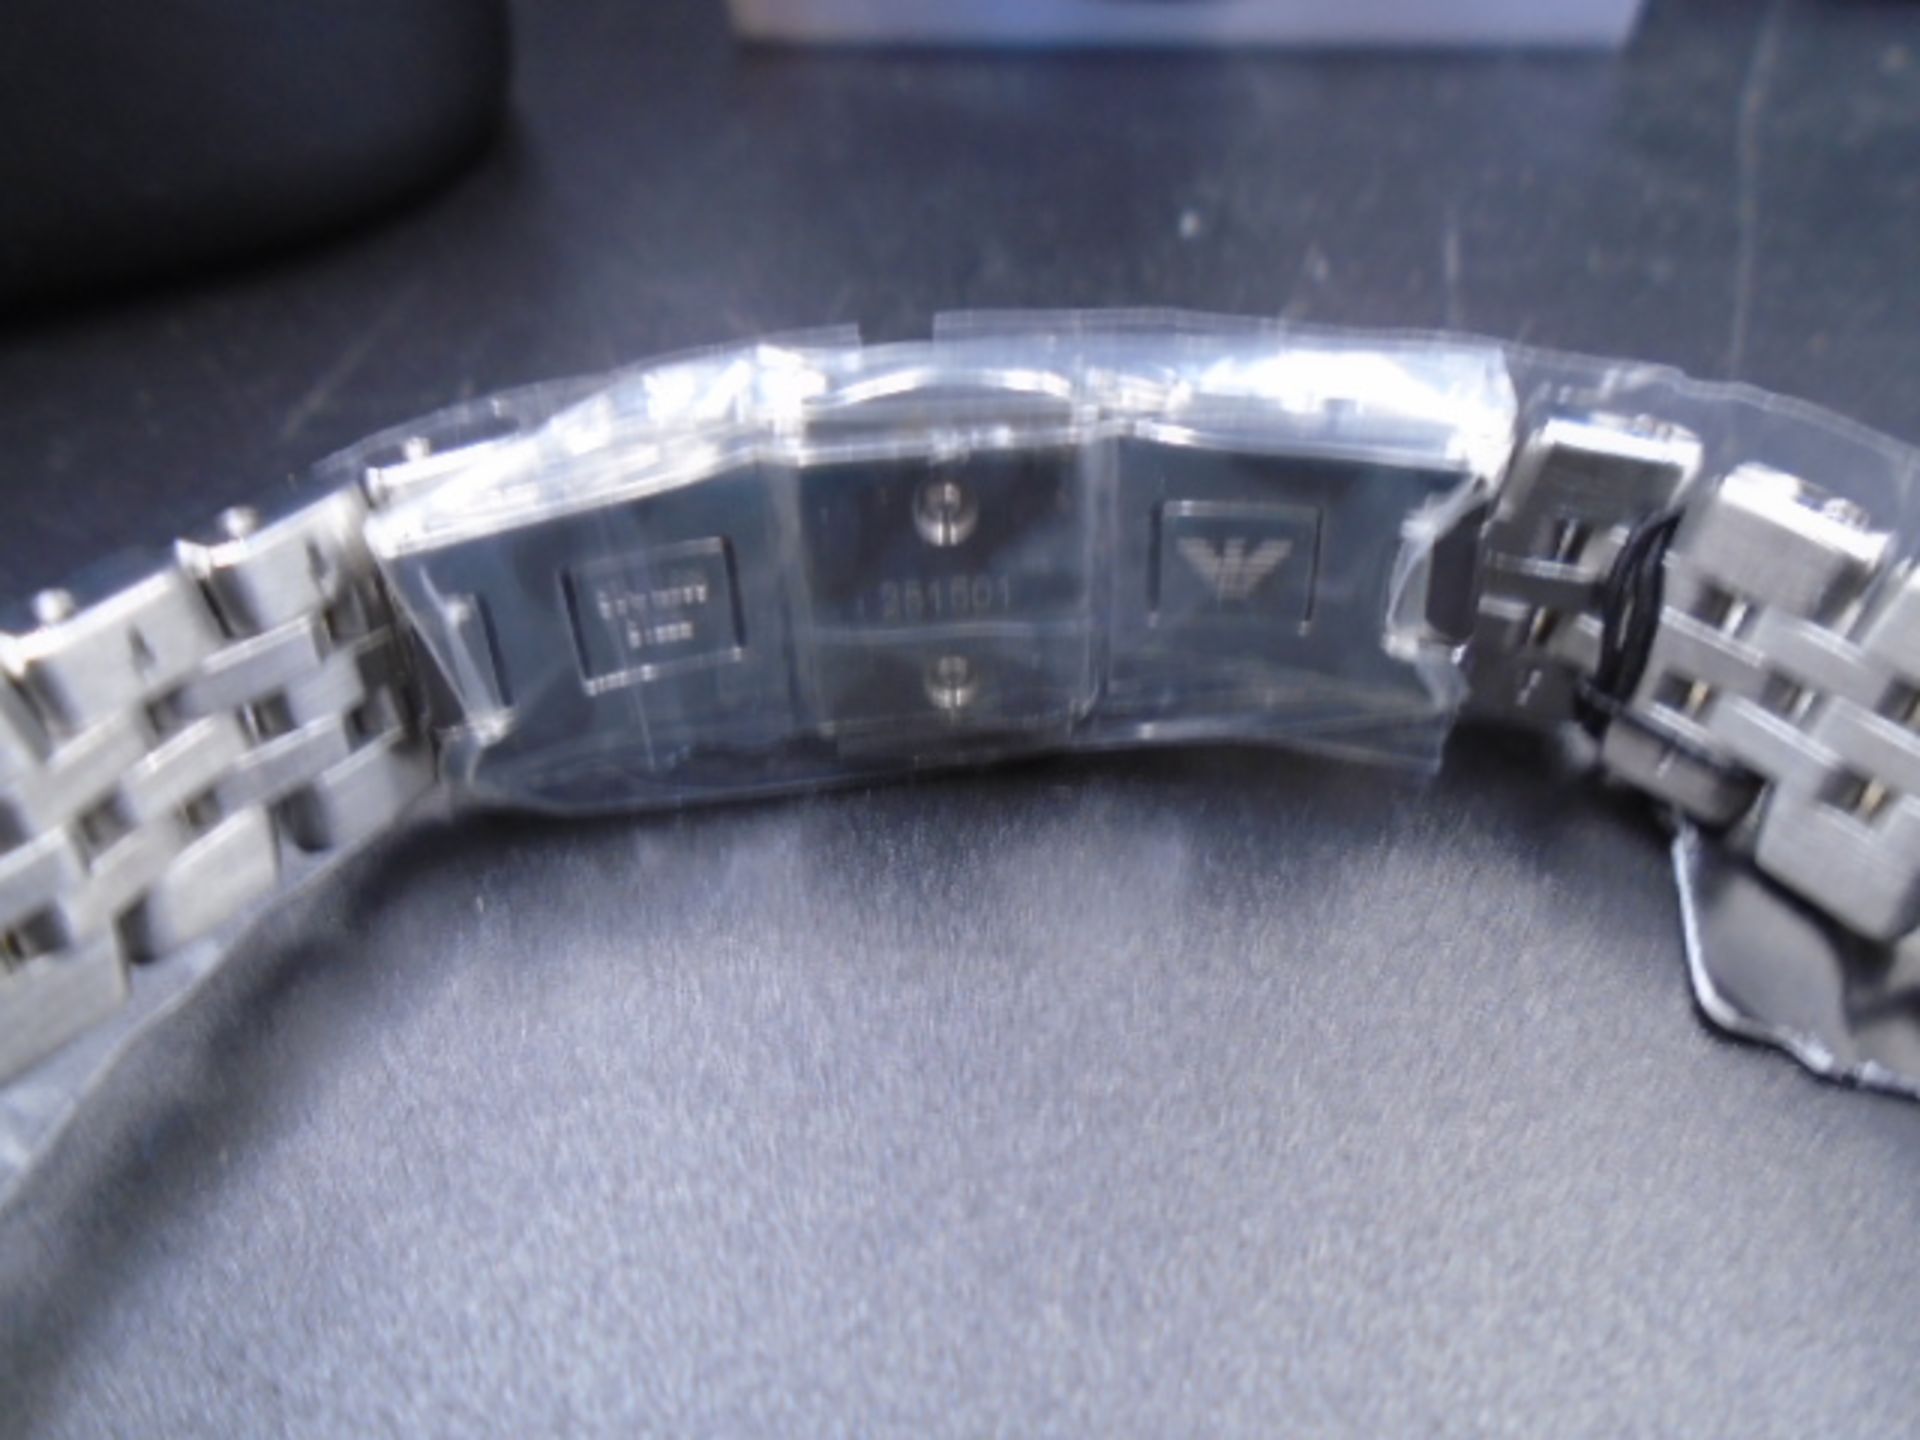 2 Emporio Armani watches - mens dino slim steel bracelet model AR 1745 and ladies quartz watch - Image 5 of 11